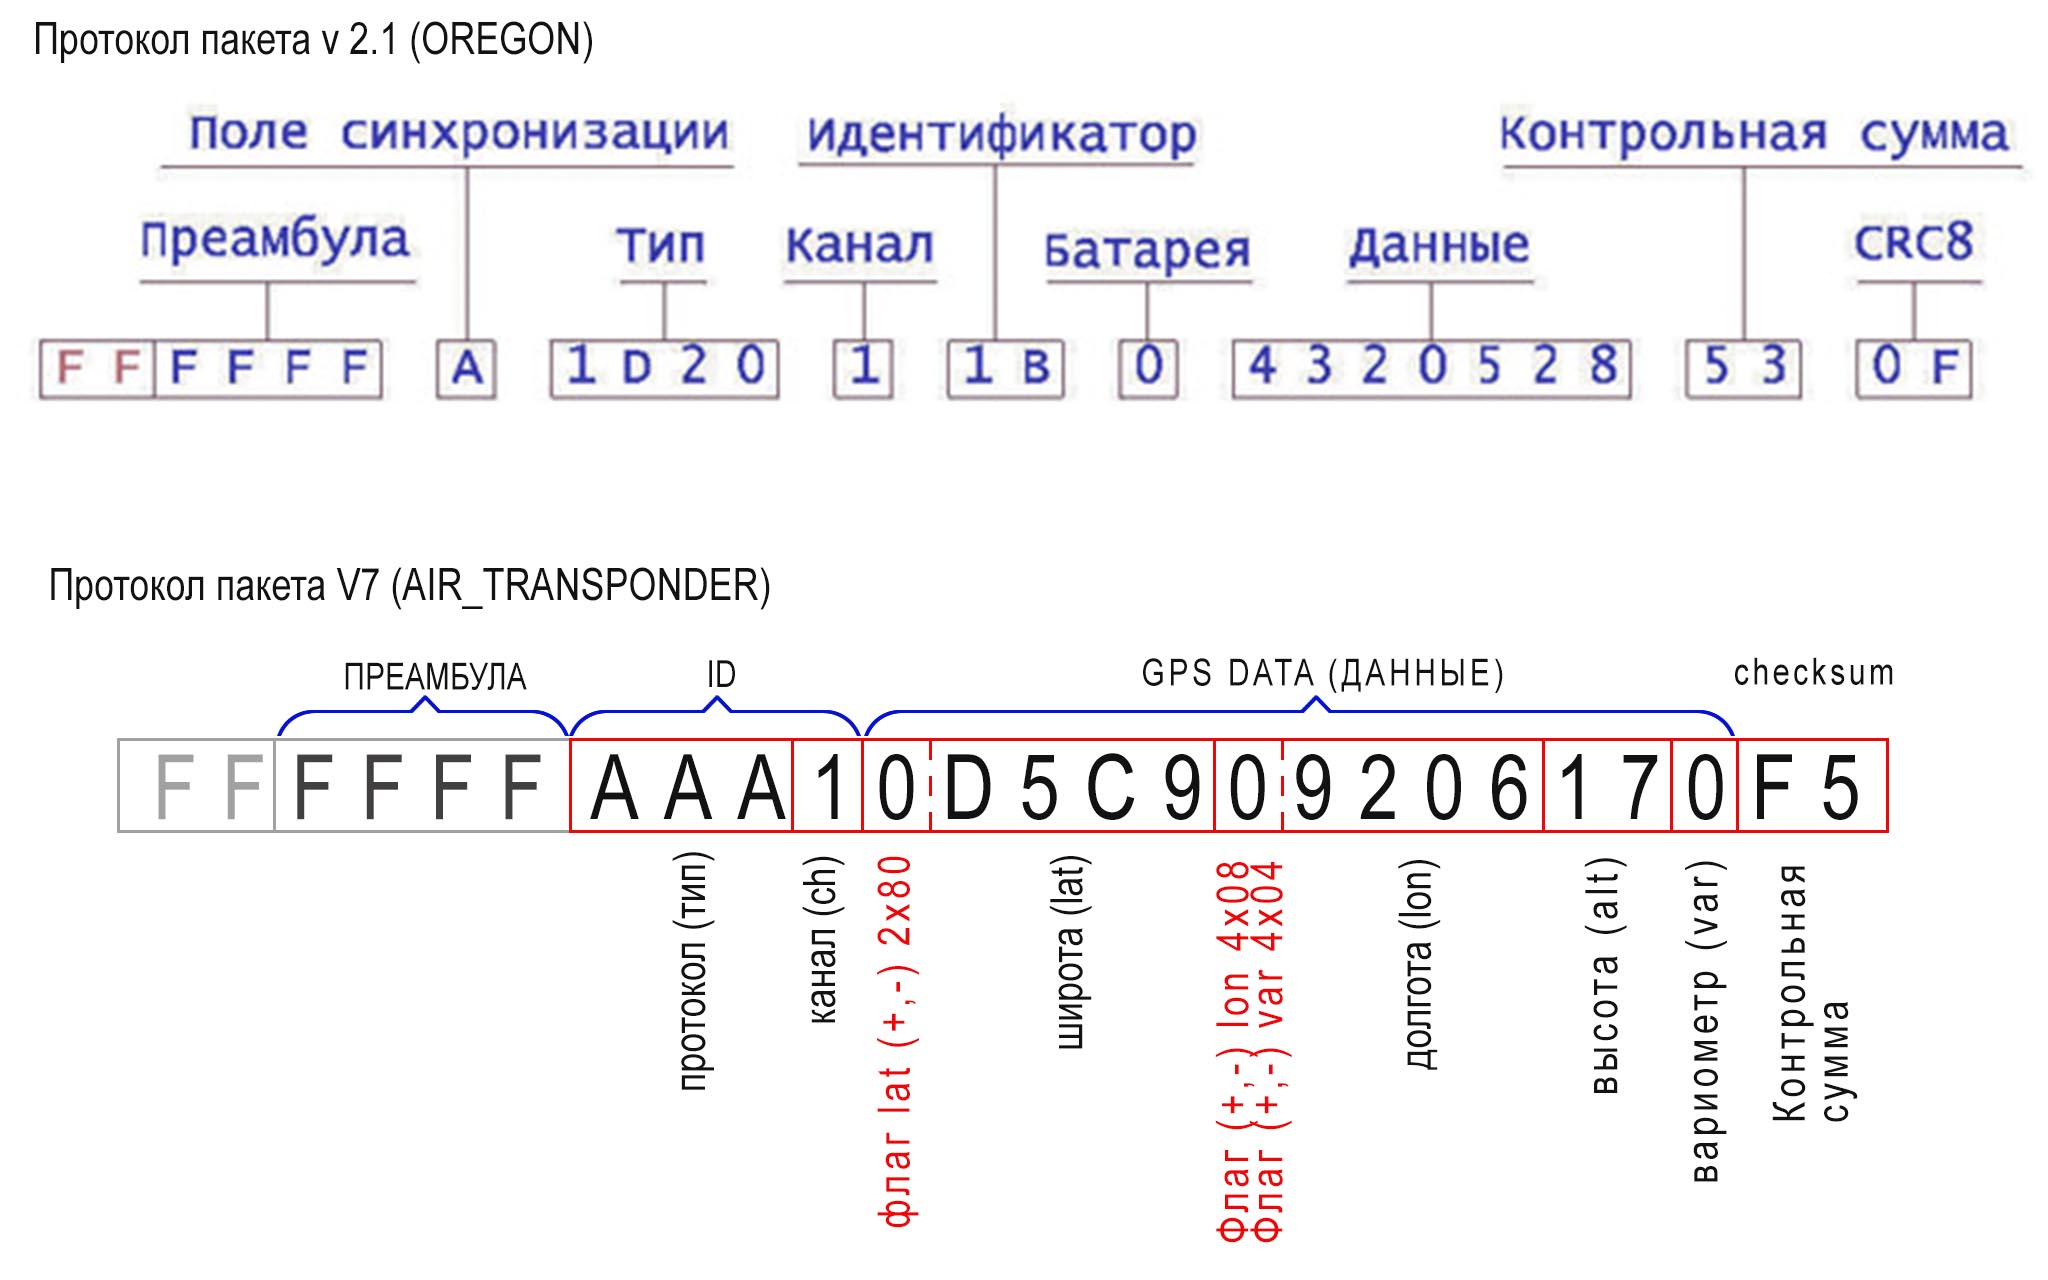 Сравнение типов пакетов V2.1 (OREGON) и пакет V7 (AIR_TRANSPONDER)